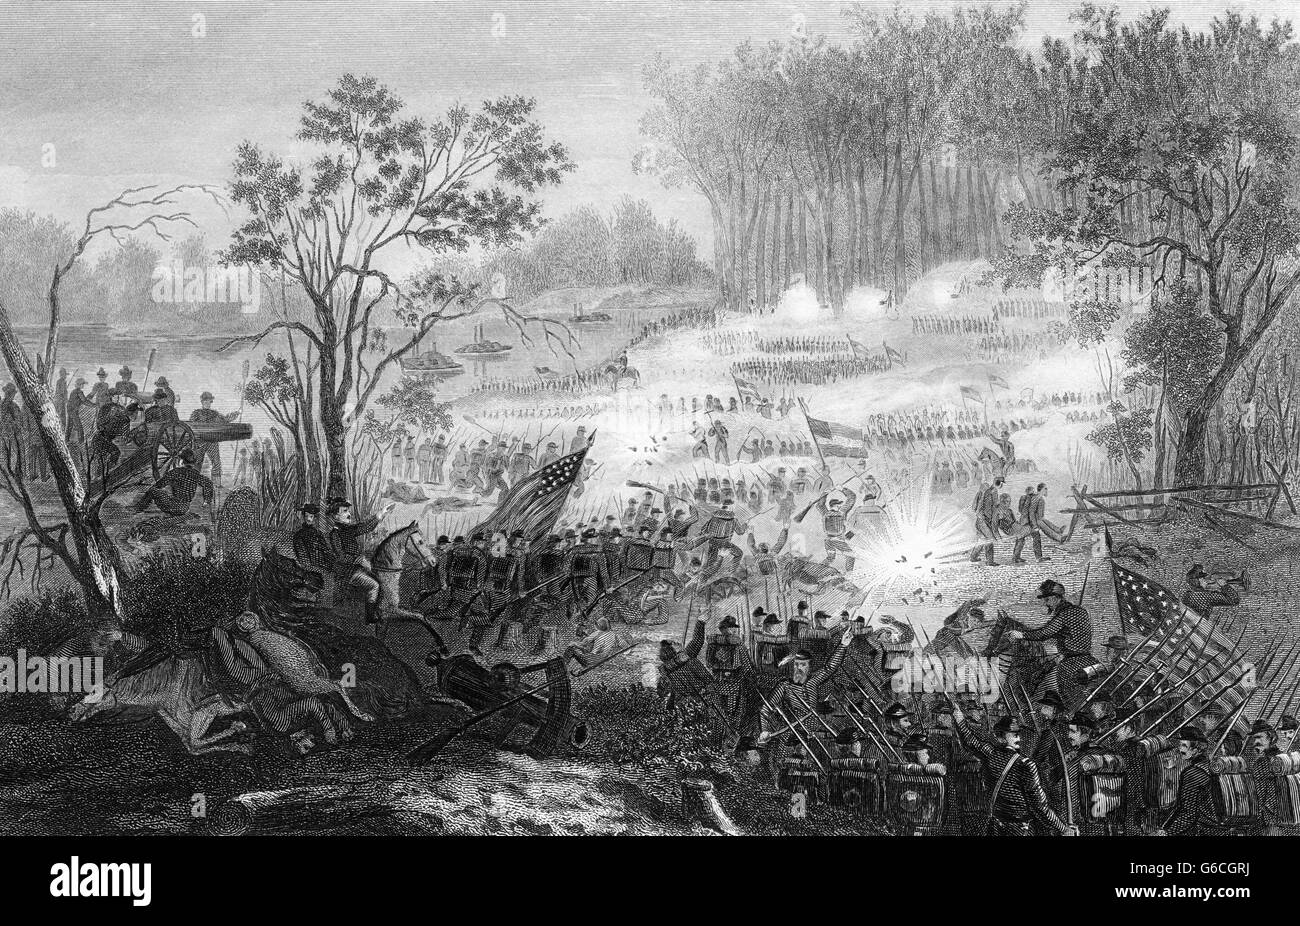 1860 Abril de 1862 GUERRA CIVIL AMERICANA LA BATALLA DE PITTSBURG LANDING SILO, Tennessee, EE.UU. Foto de stock